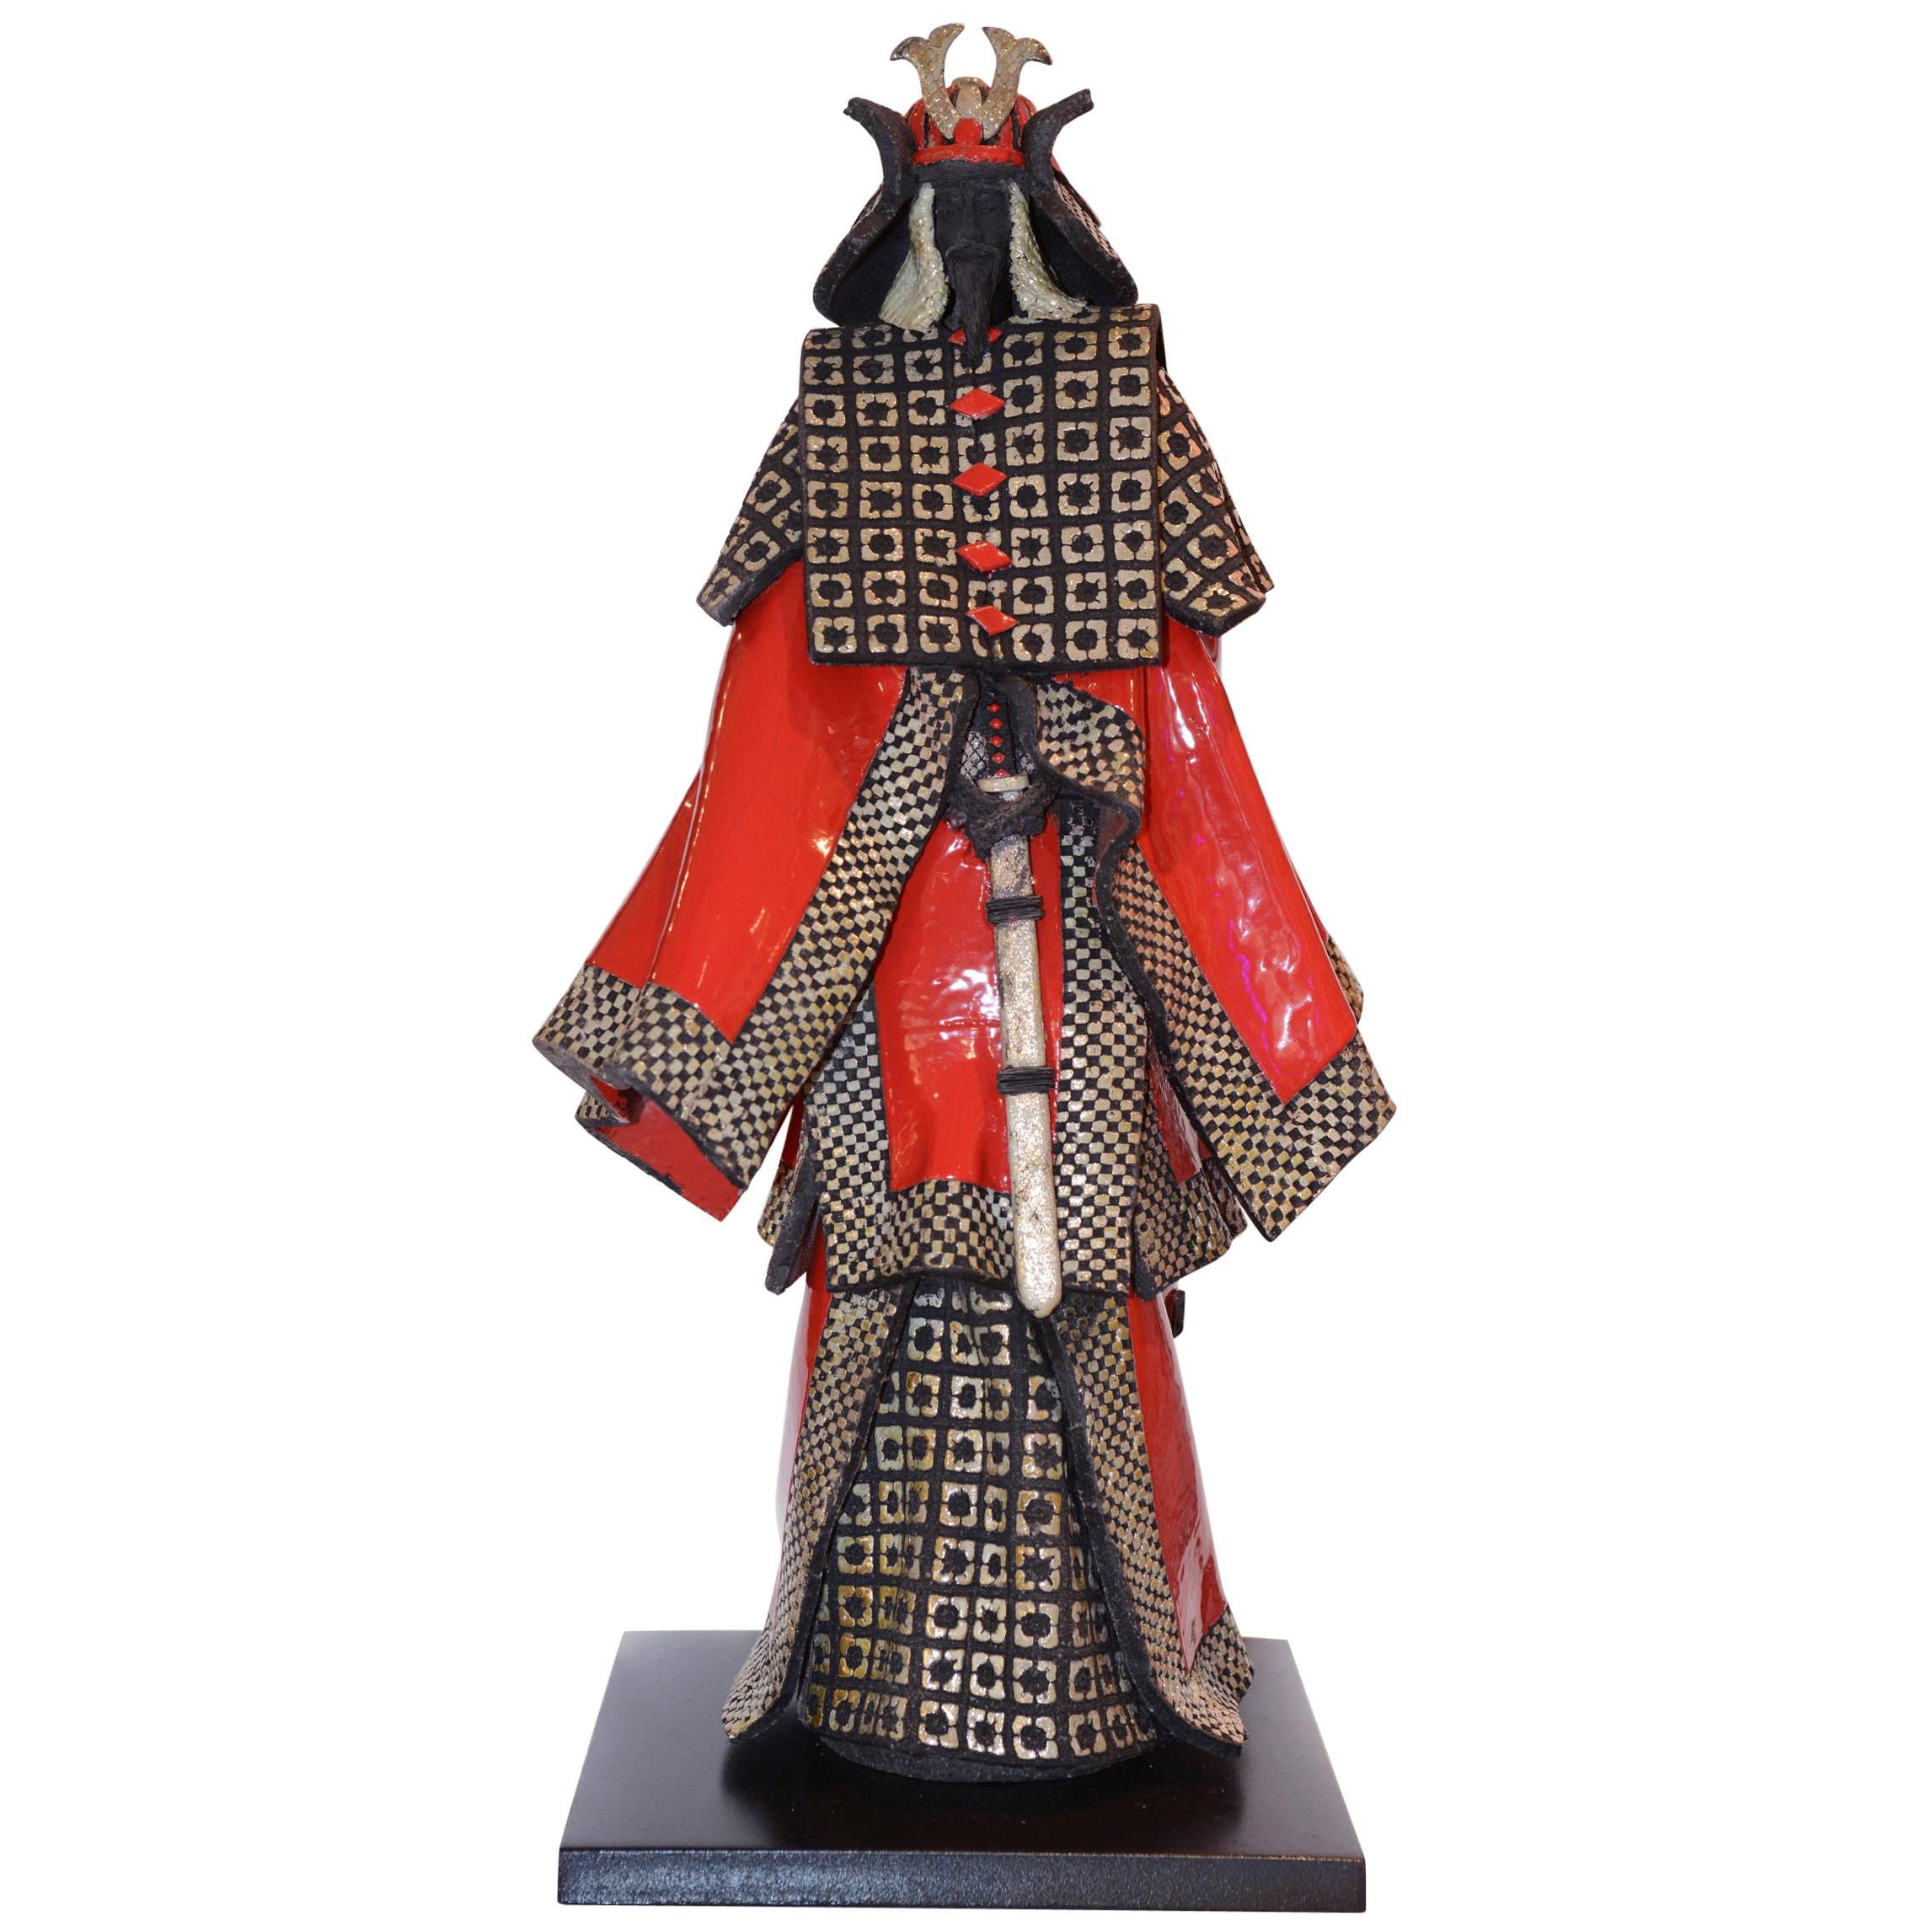 Samurai Raku Red and Silver Sculpture